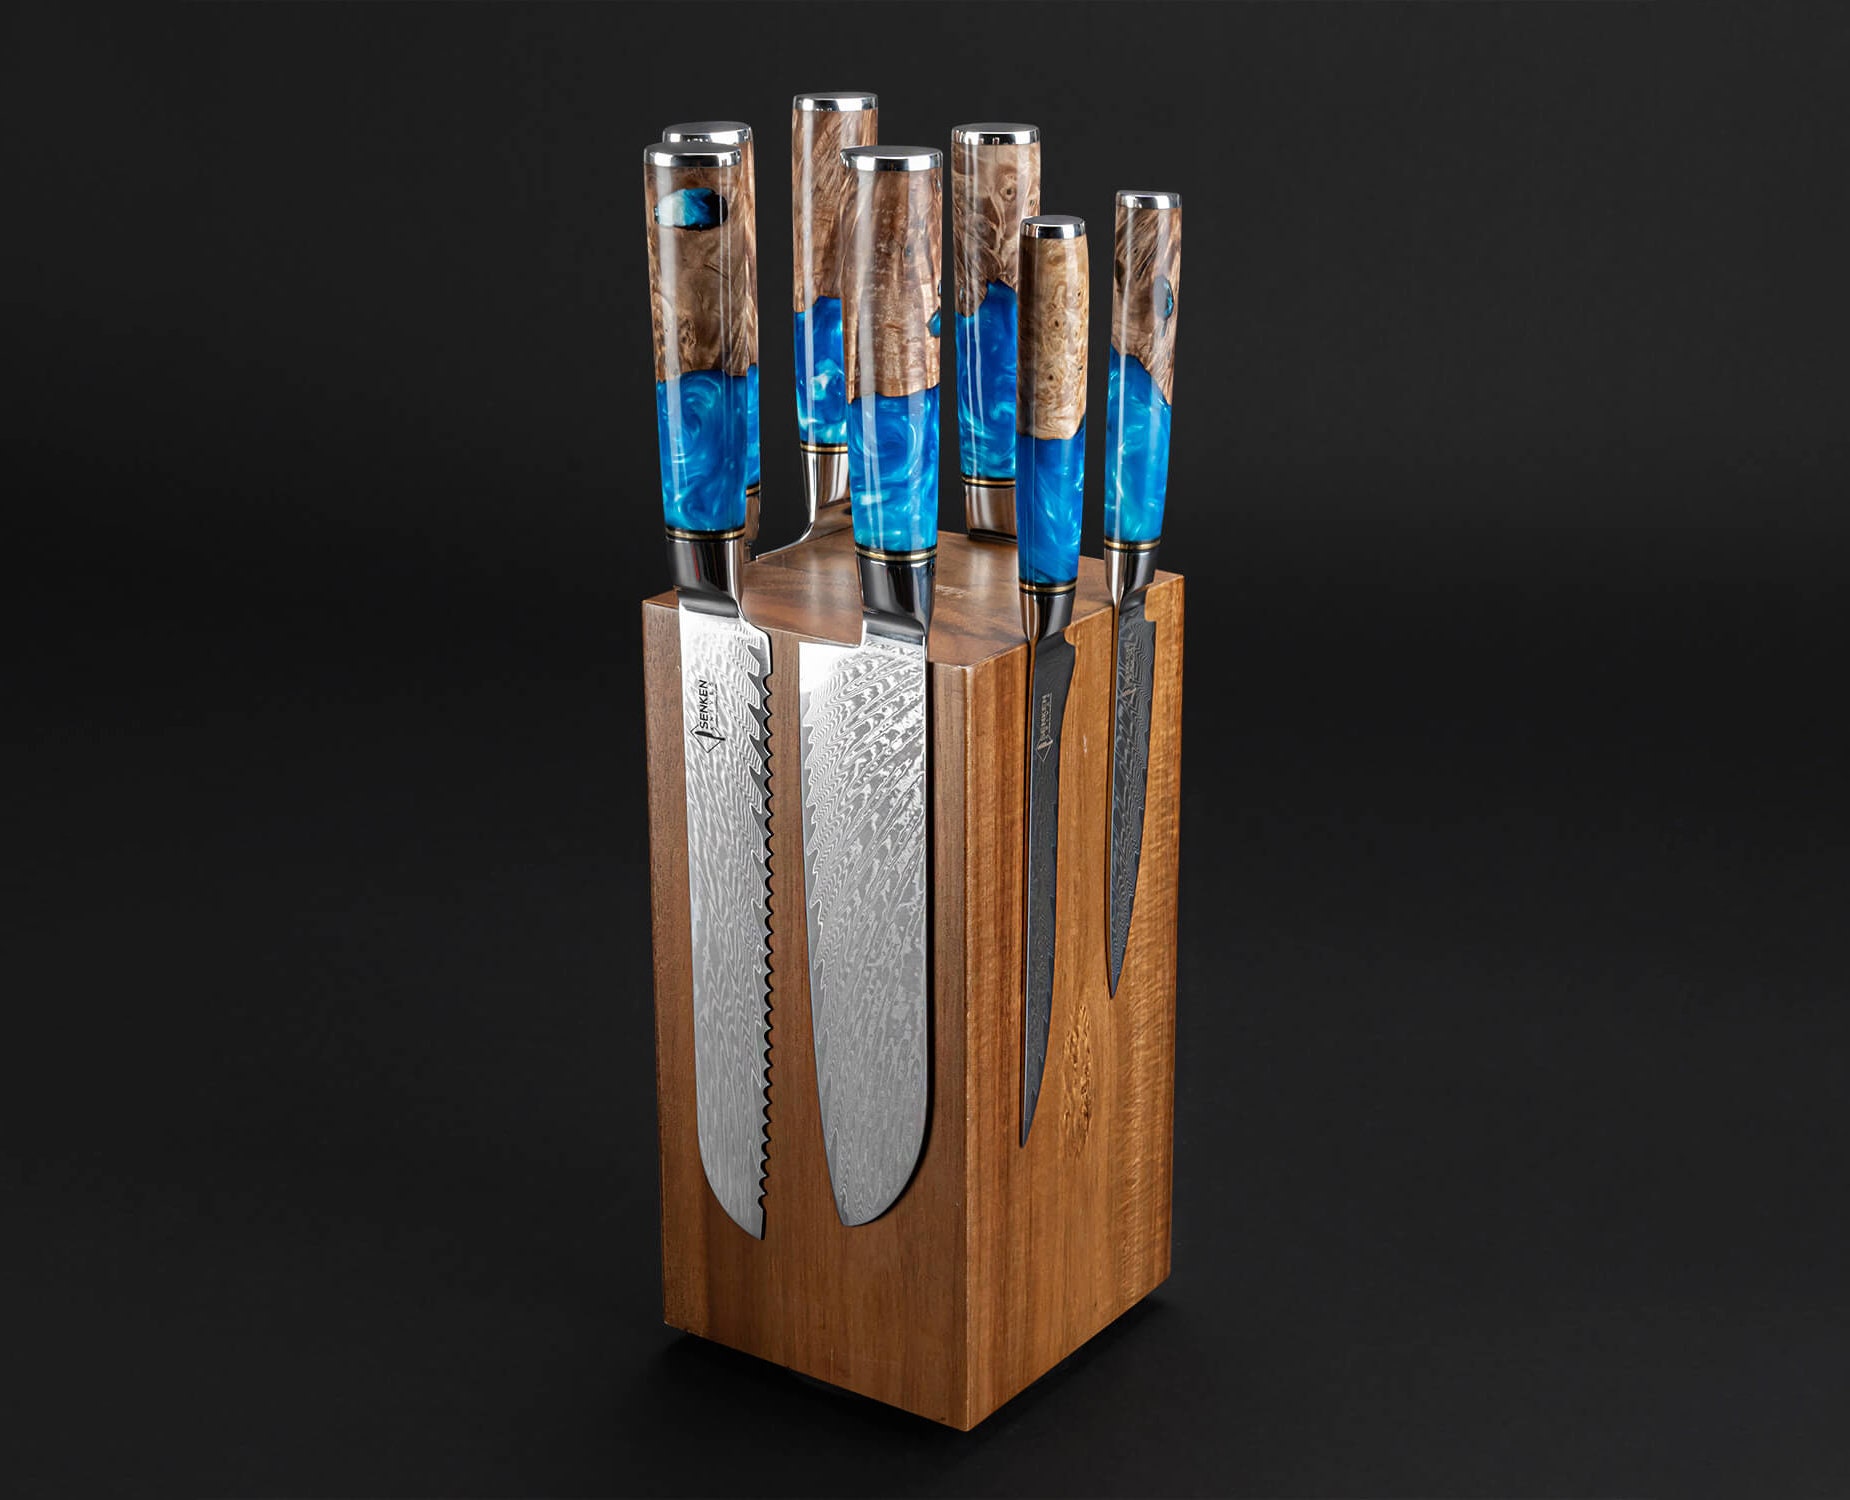  SENKEN Damascus Steak Knife Set - Tsunami Collection - 67-Layer  Japanese VG10 Steel - Razor Sharp Serrated Blades, Blue Resin & Natural  Wood Pattern Handles, Luxury Gift Box (6 Steak Knife